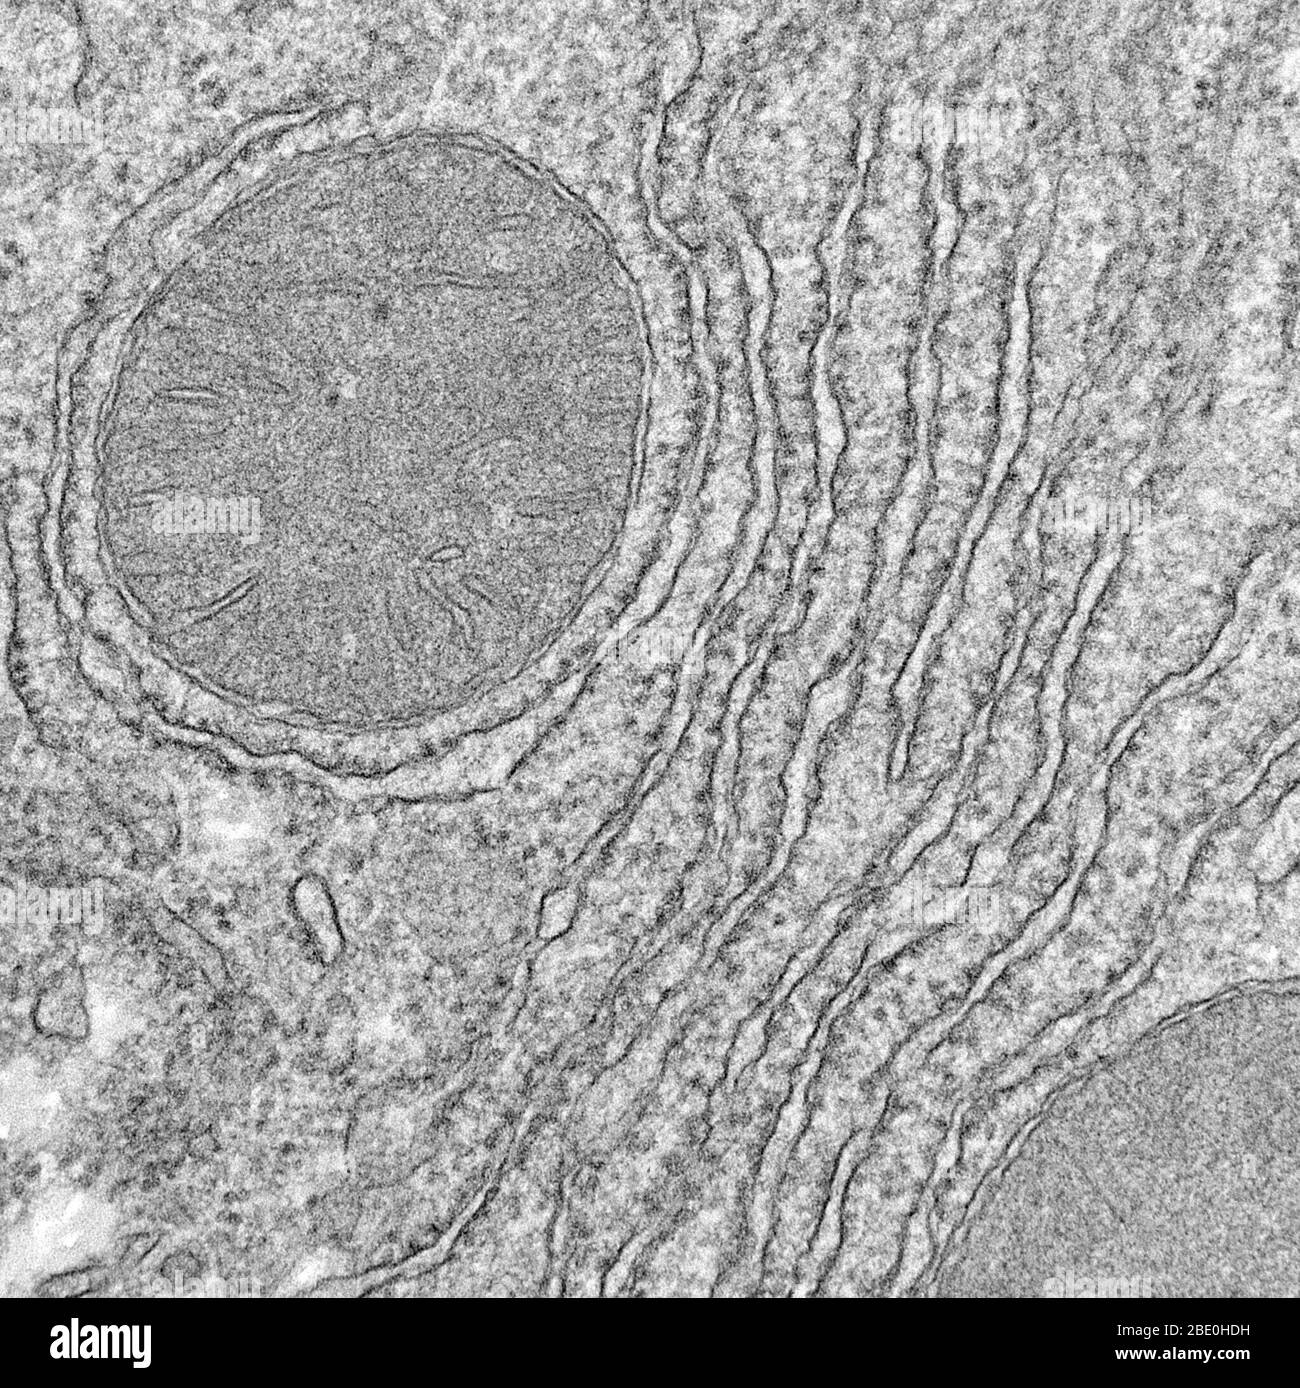 mitochondria electron micrograph labelled